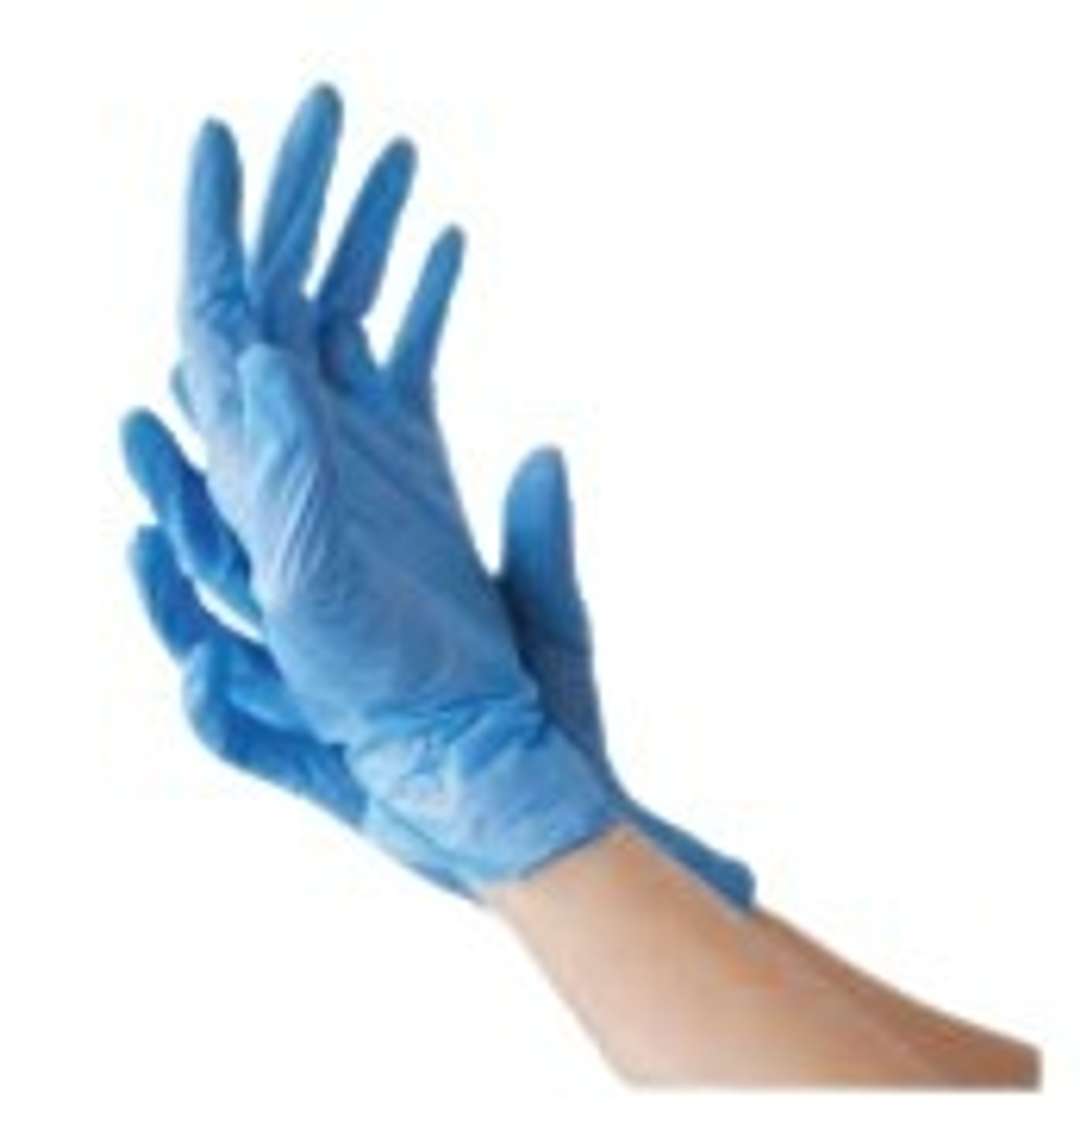 Meddis Ready to Use Gloves